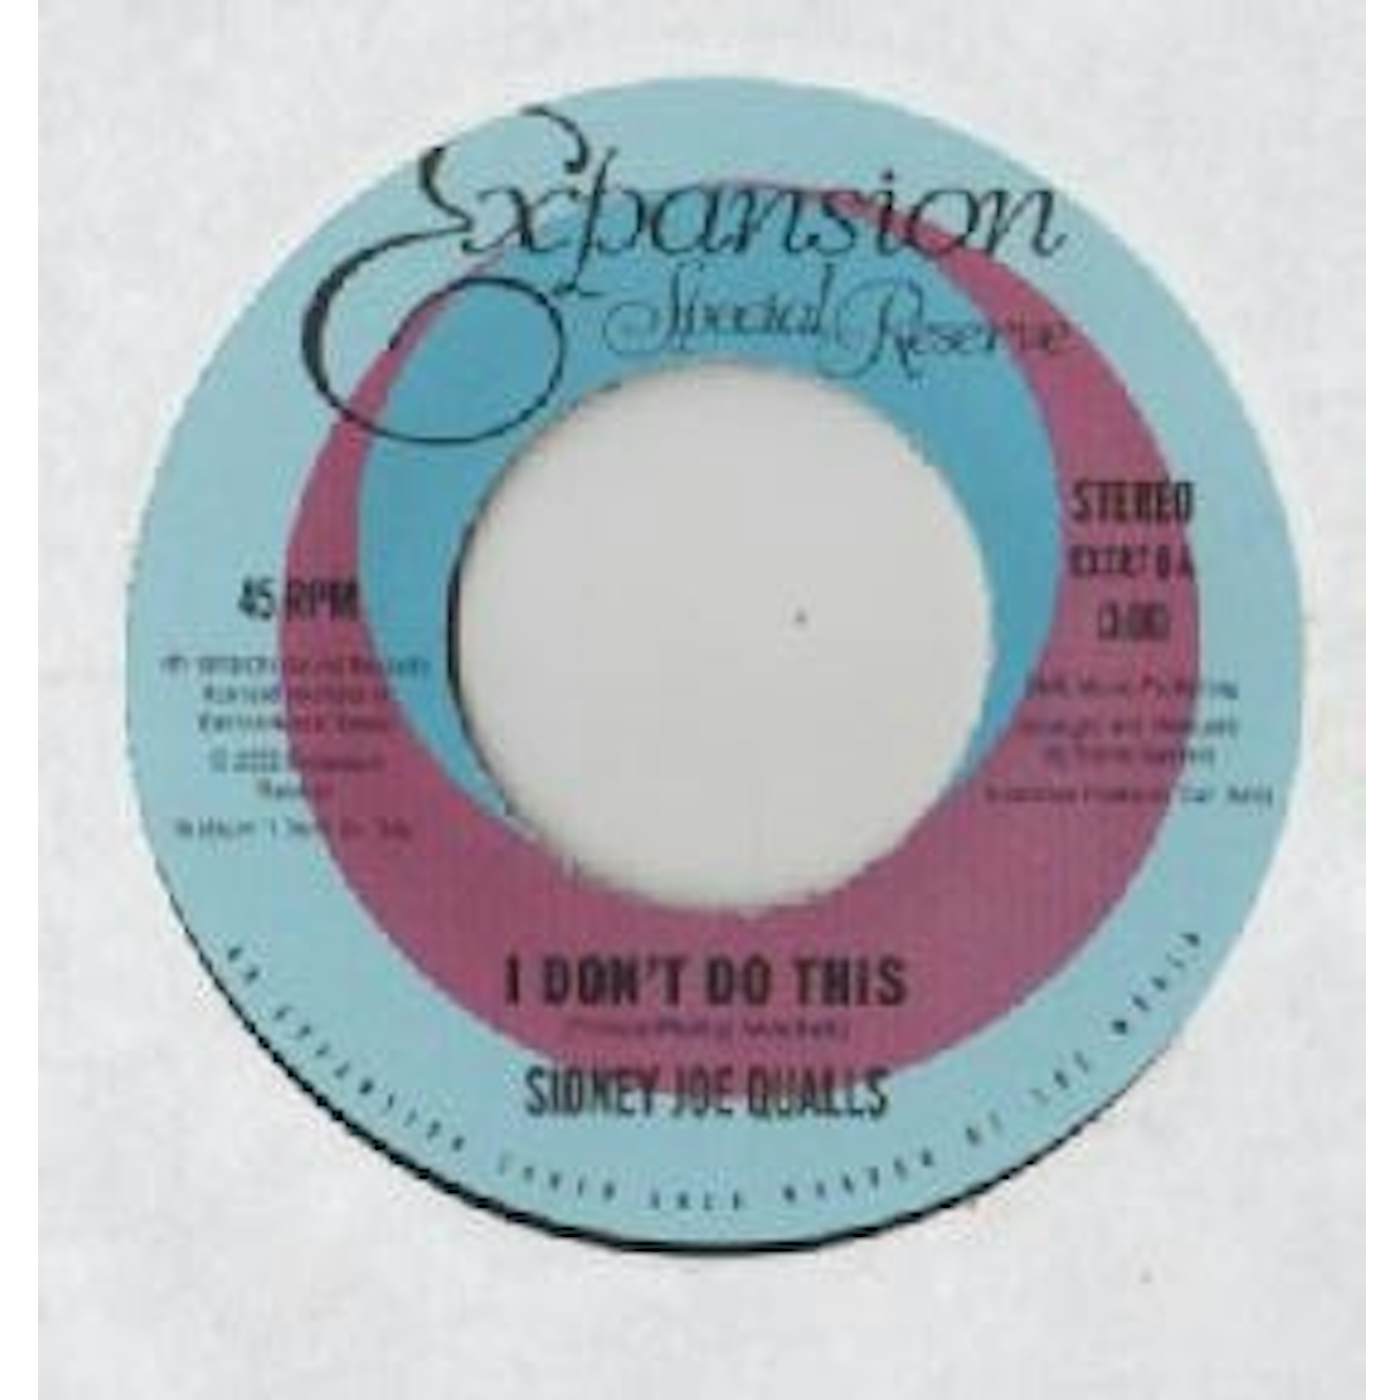 Sidney Joe Qualls I DON'T DO THIS/RUN TO ME Vinyl Record